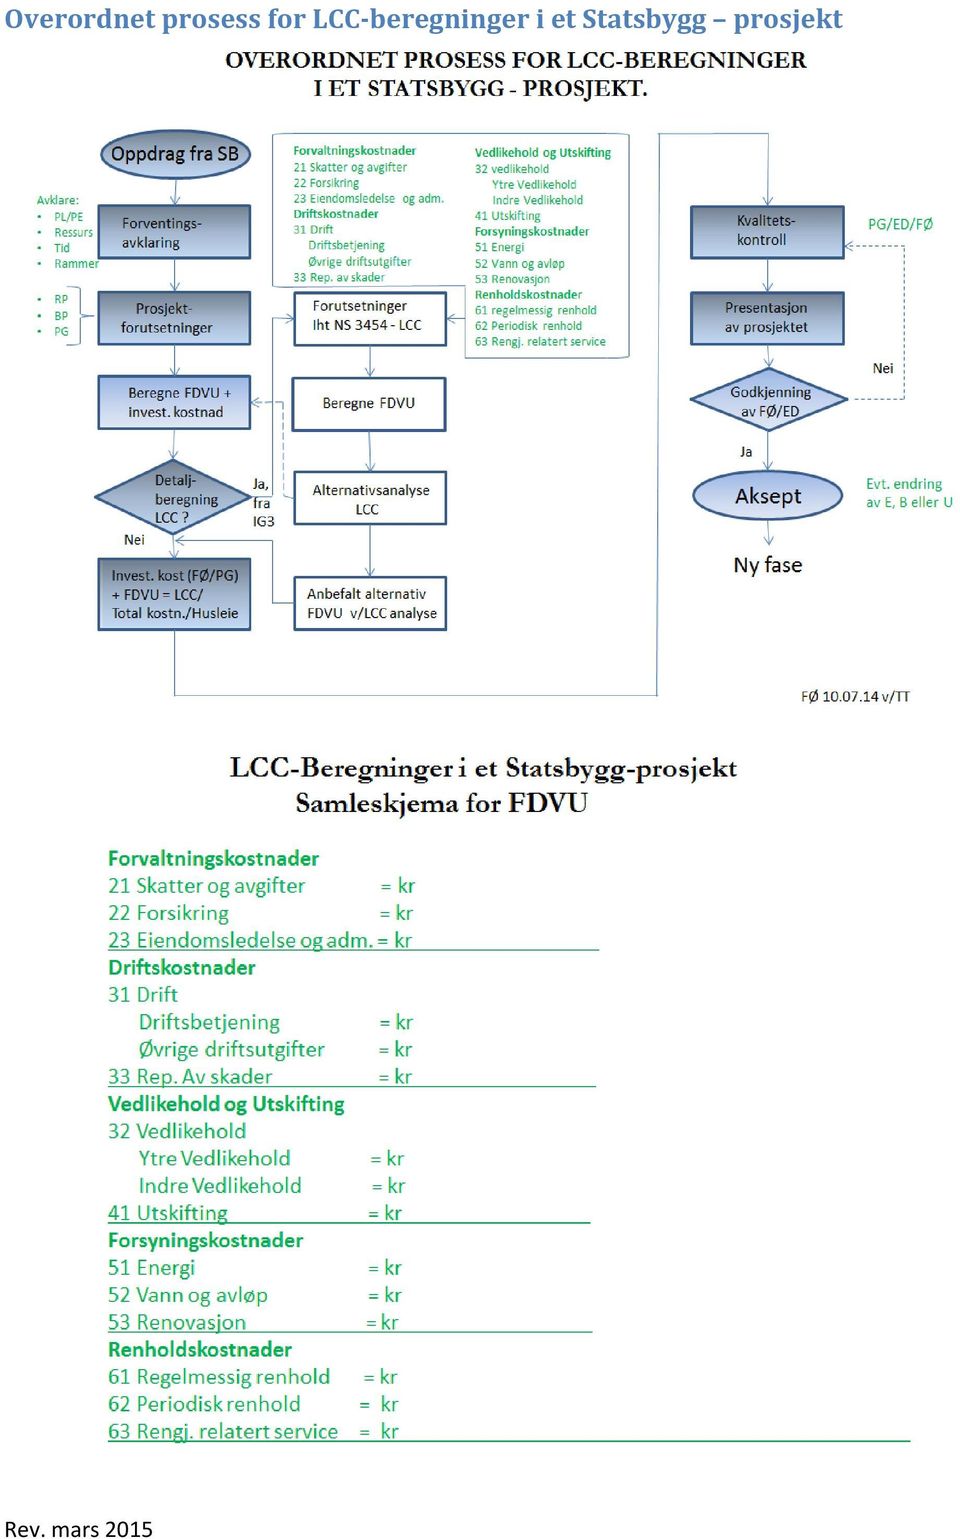 LCC-beregninger